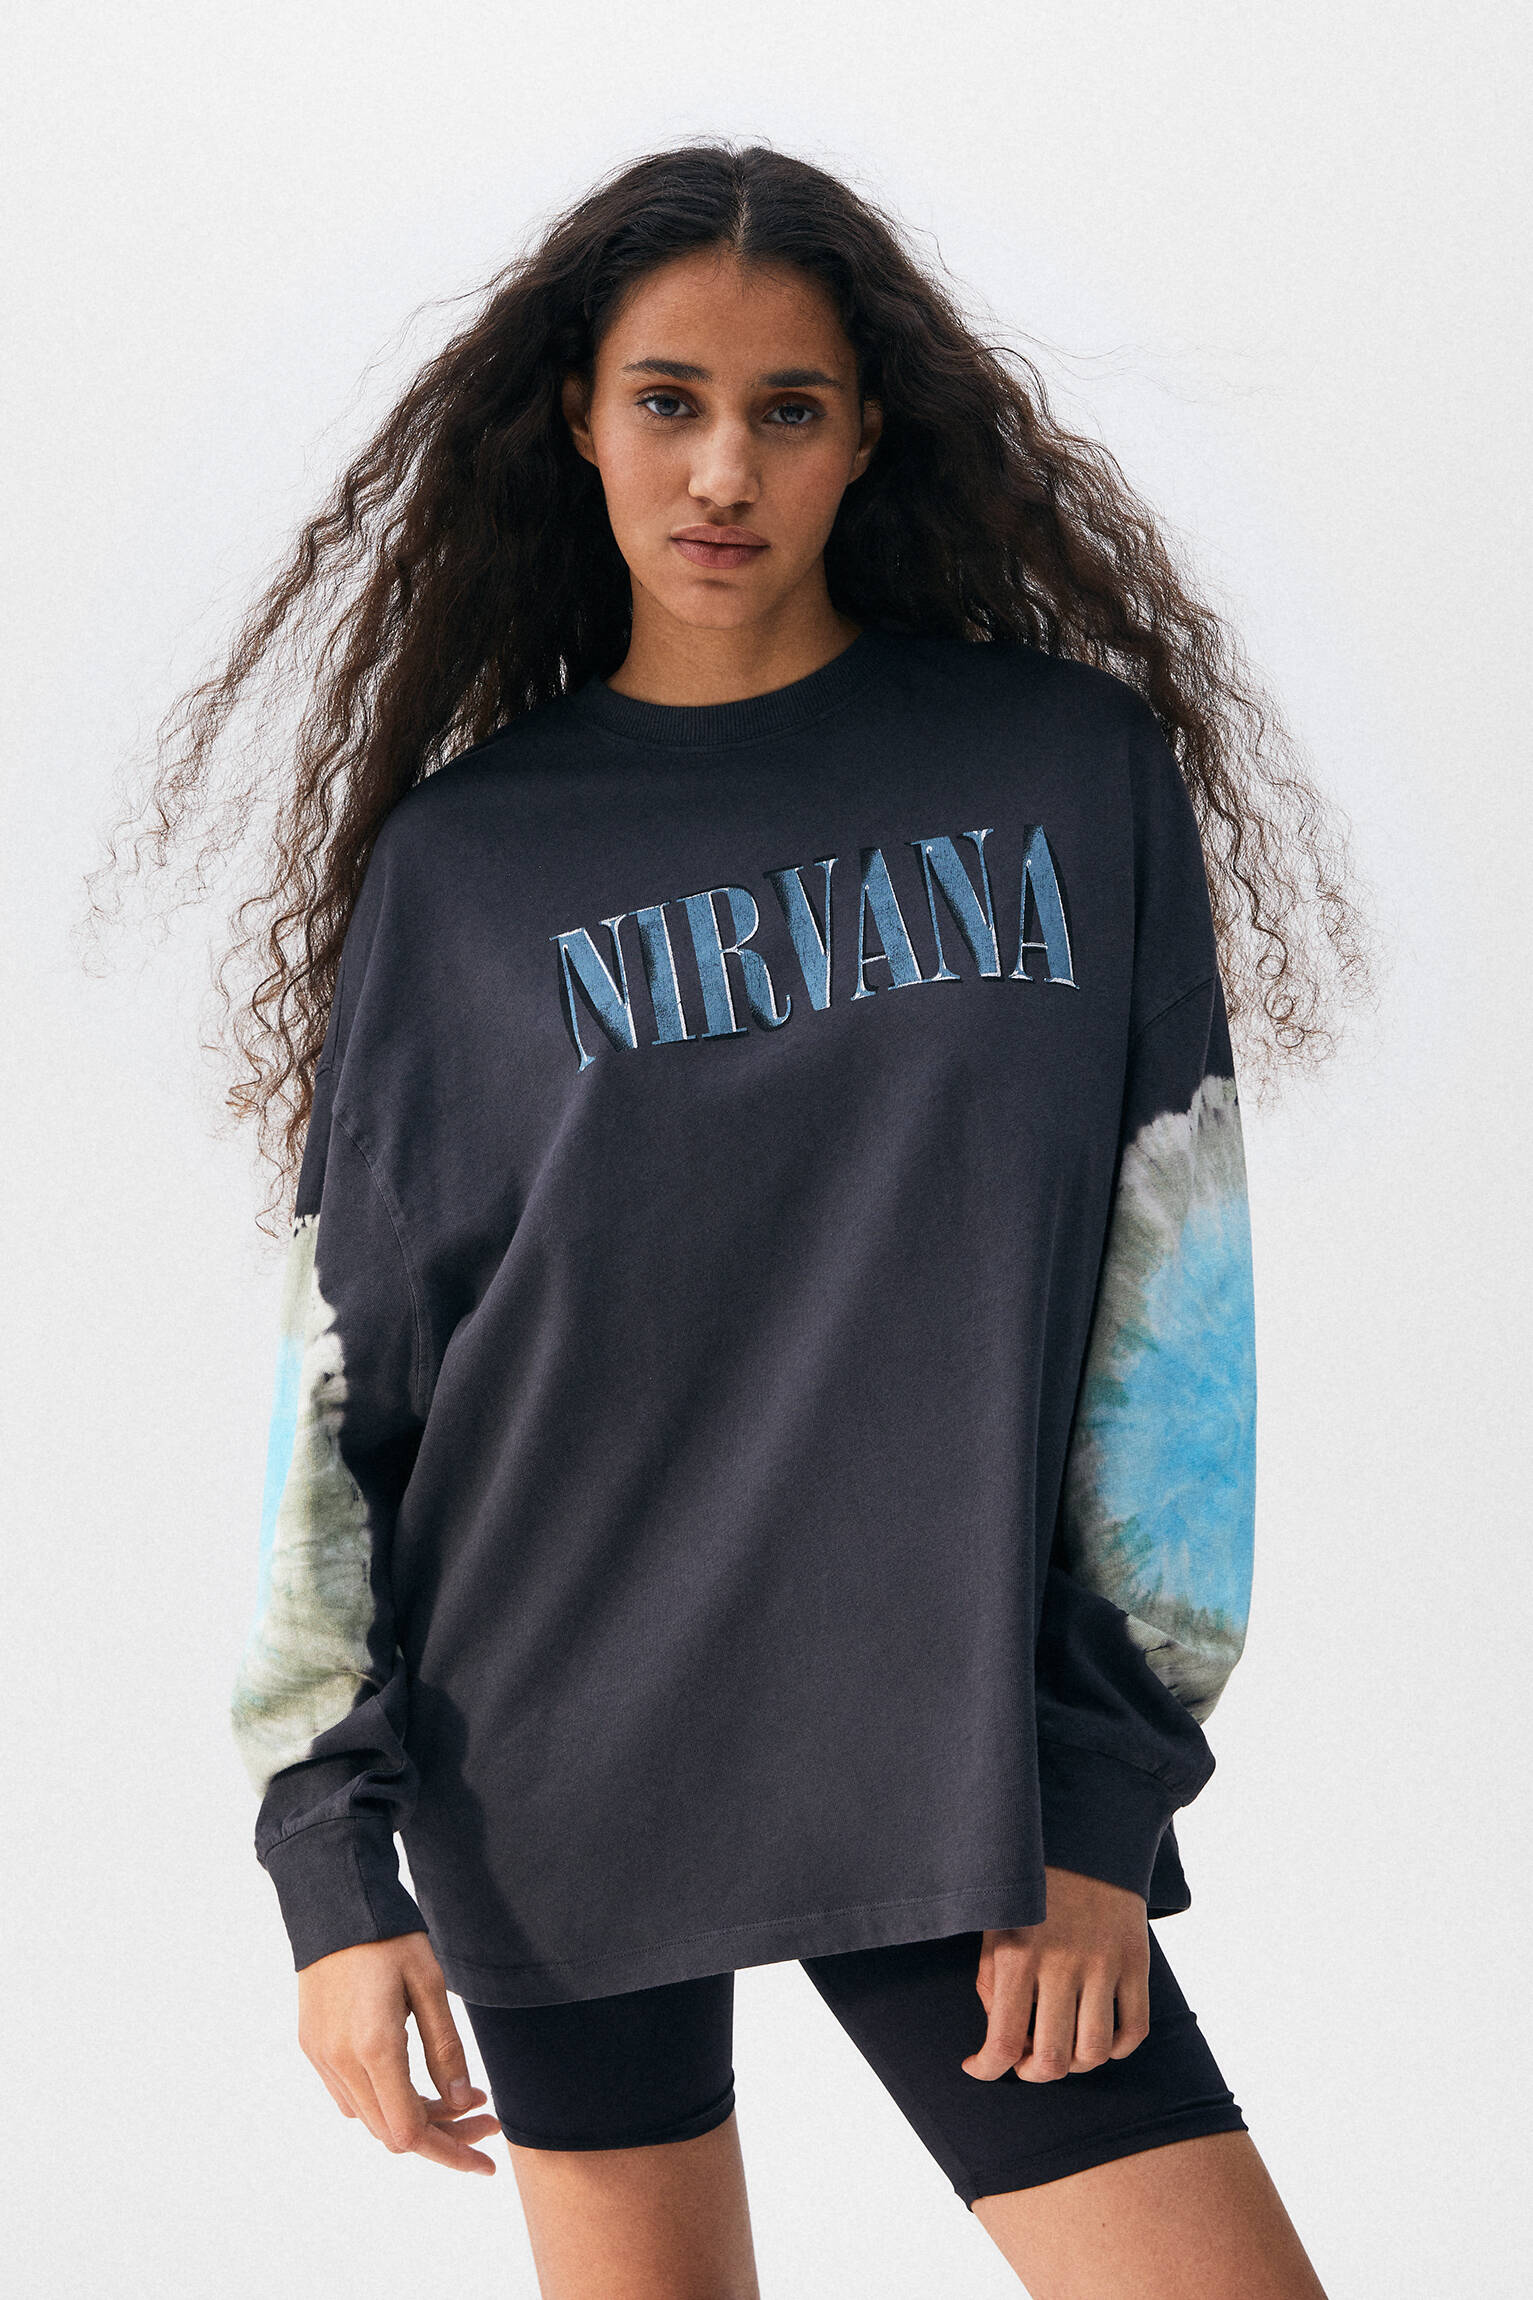 & Bear - Camiseta Nirvana manga tie-dye